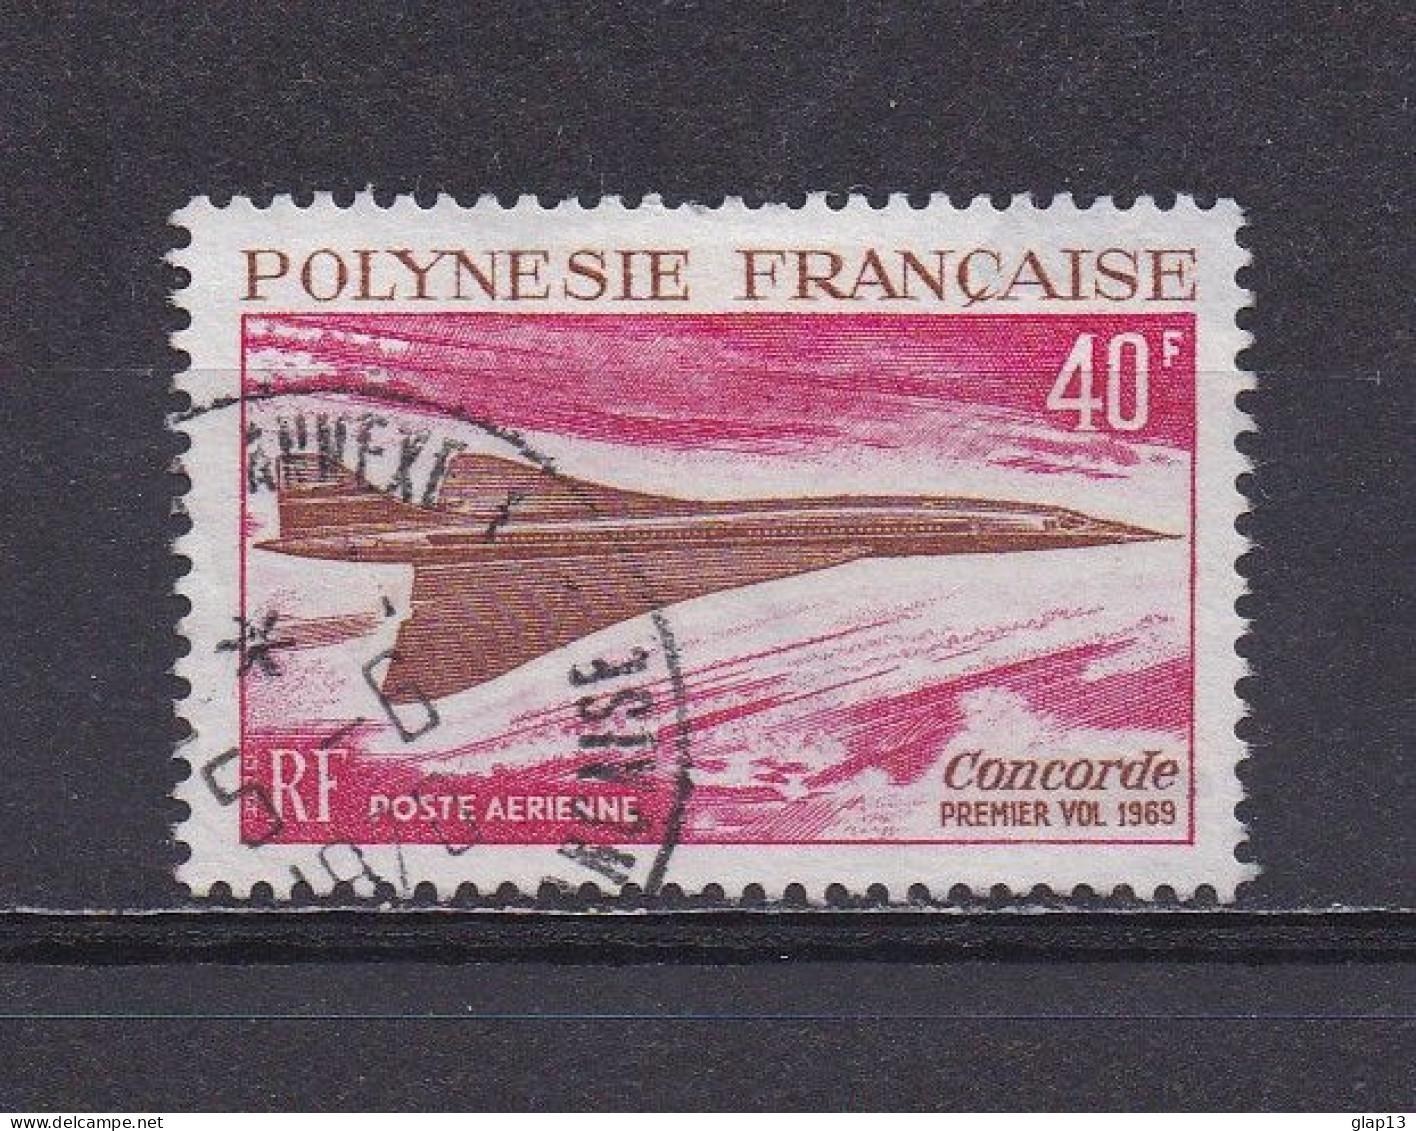 POLYNESIE FRANCAISE 1969 PA N°27 OBLITERE CONCORDE - Usados